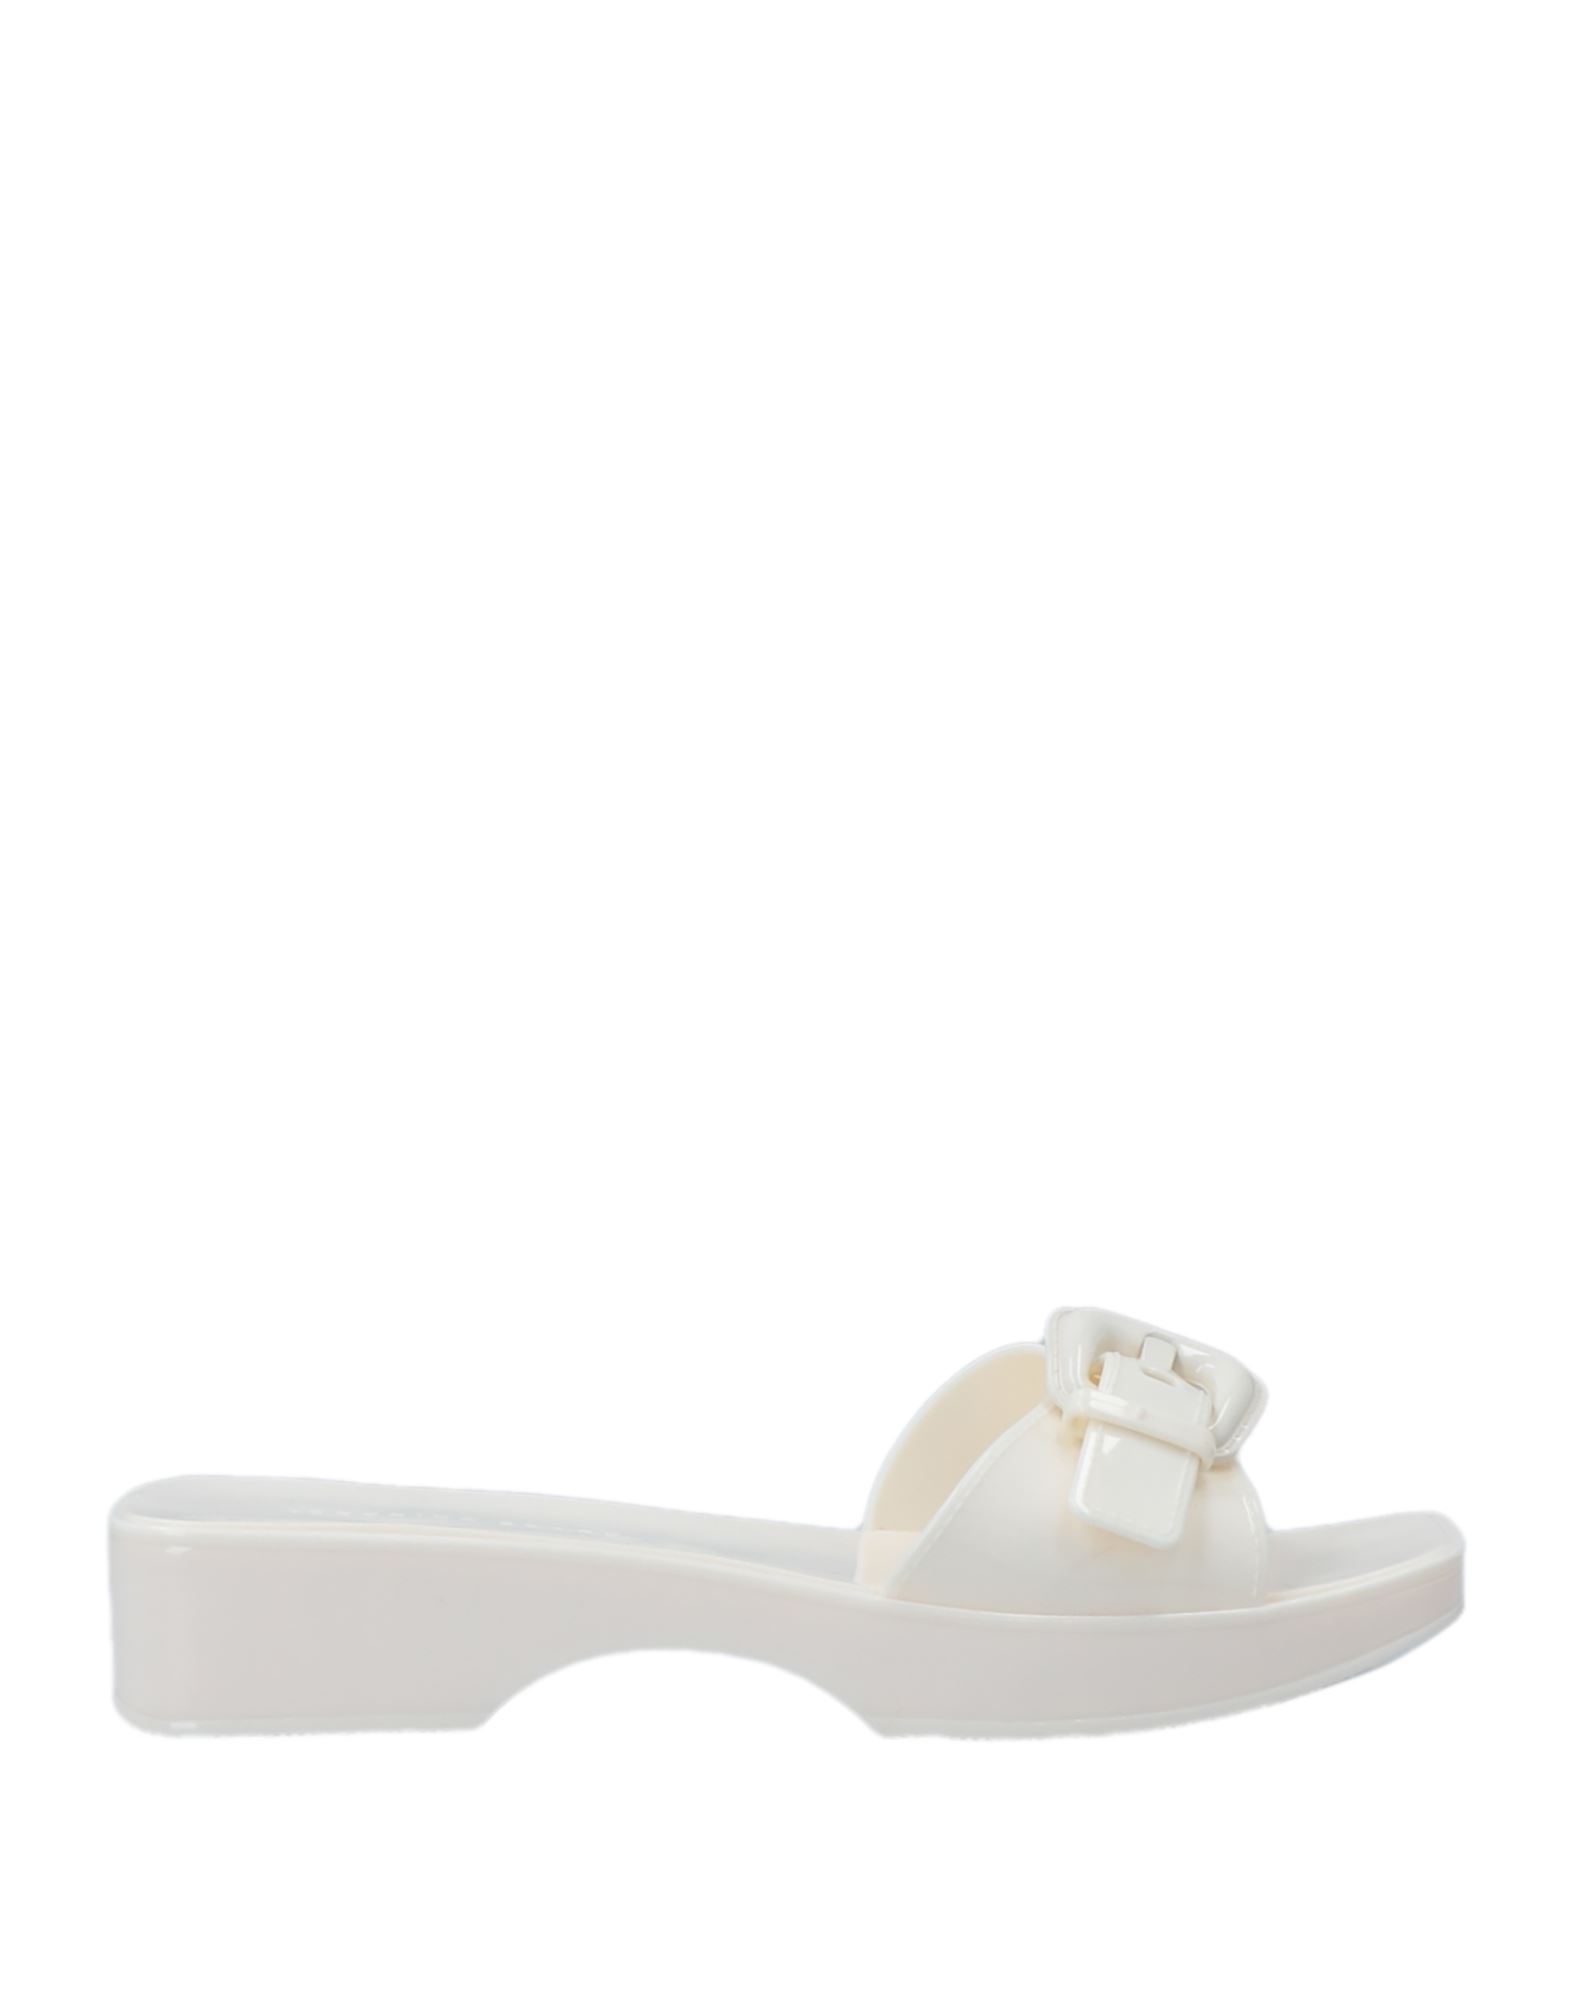 Veronica Beard Sandals In White